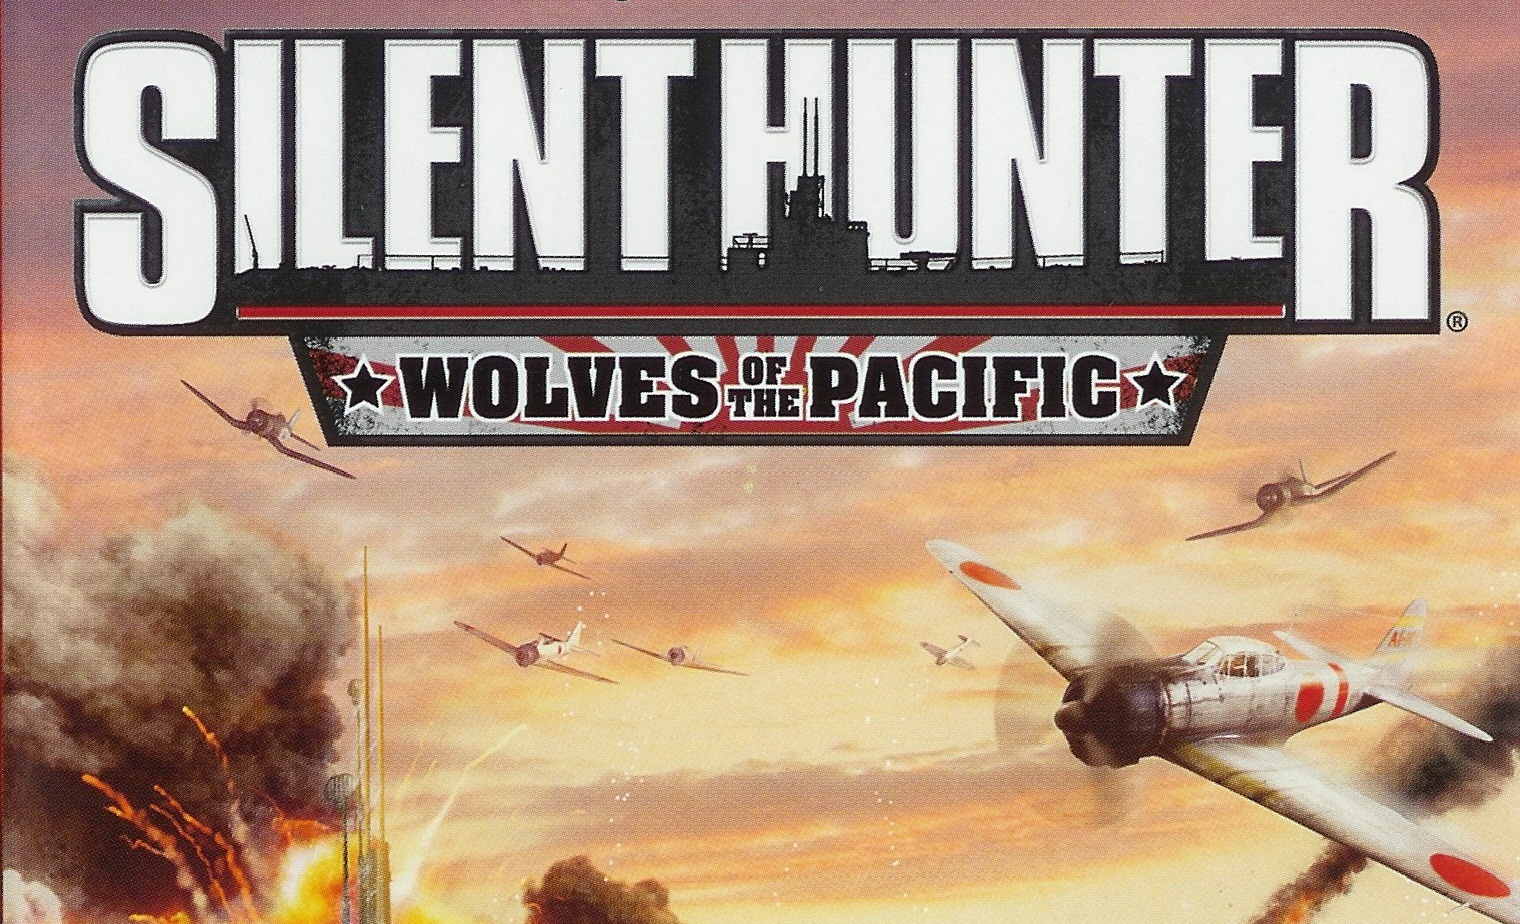 silent hunter 4 gold edition